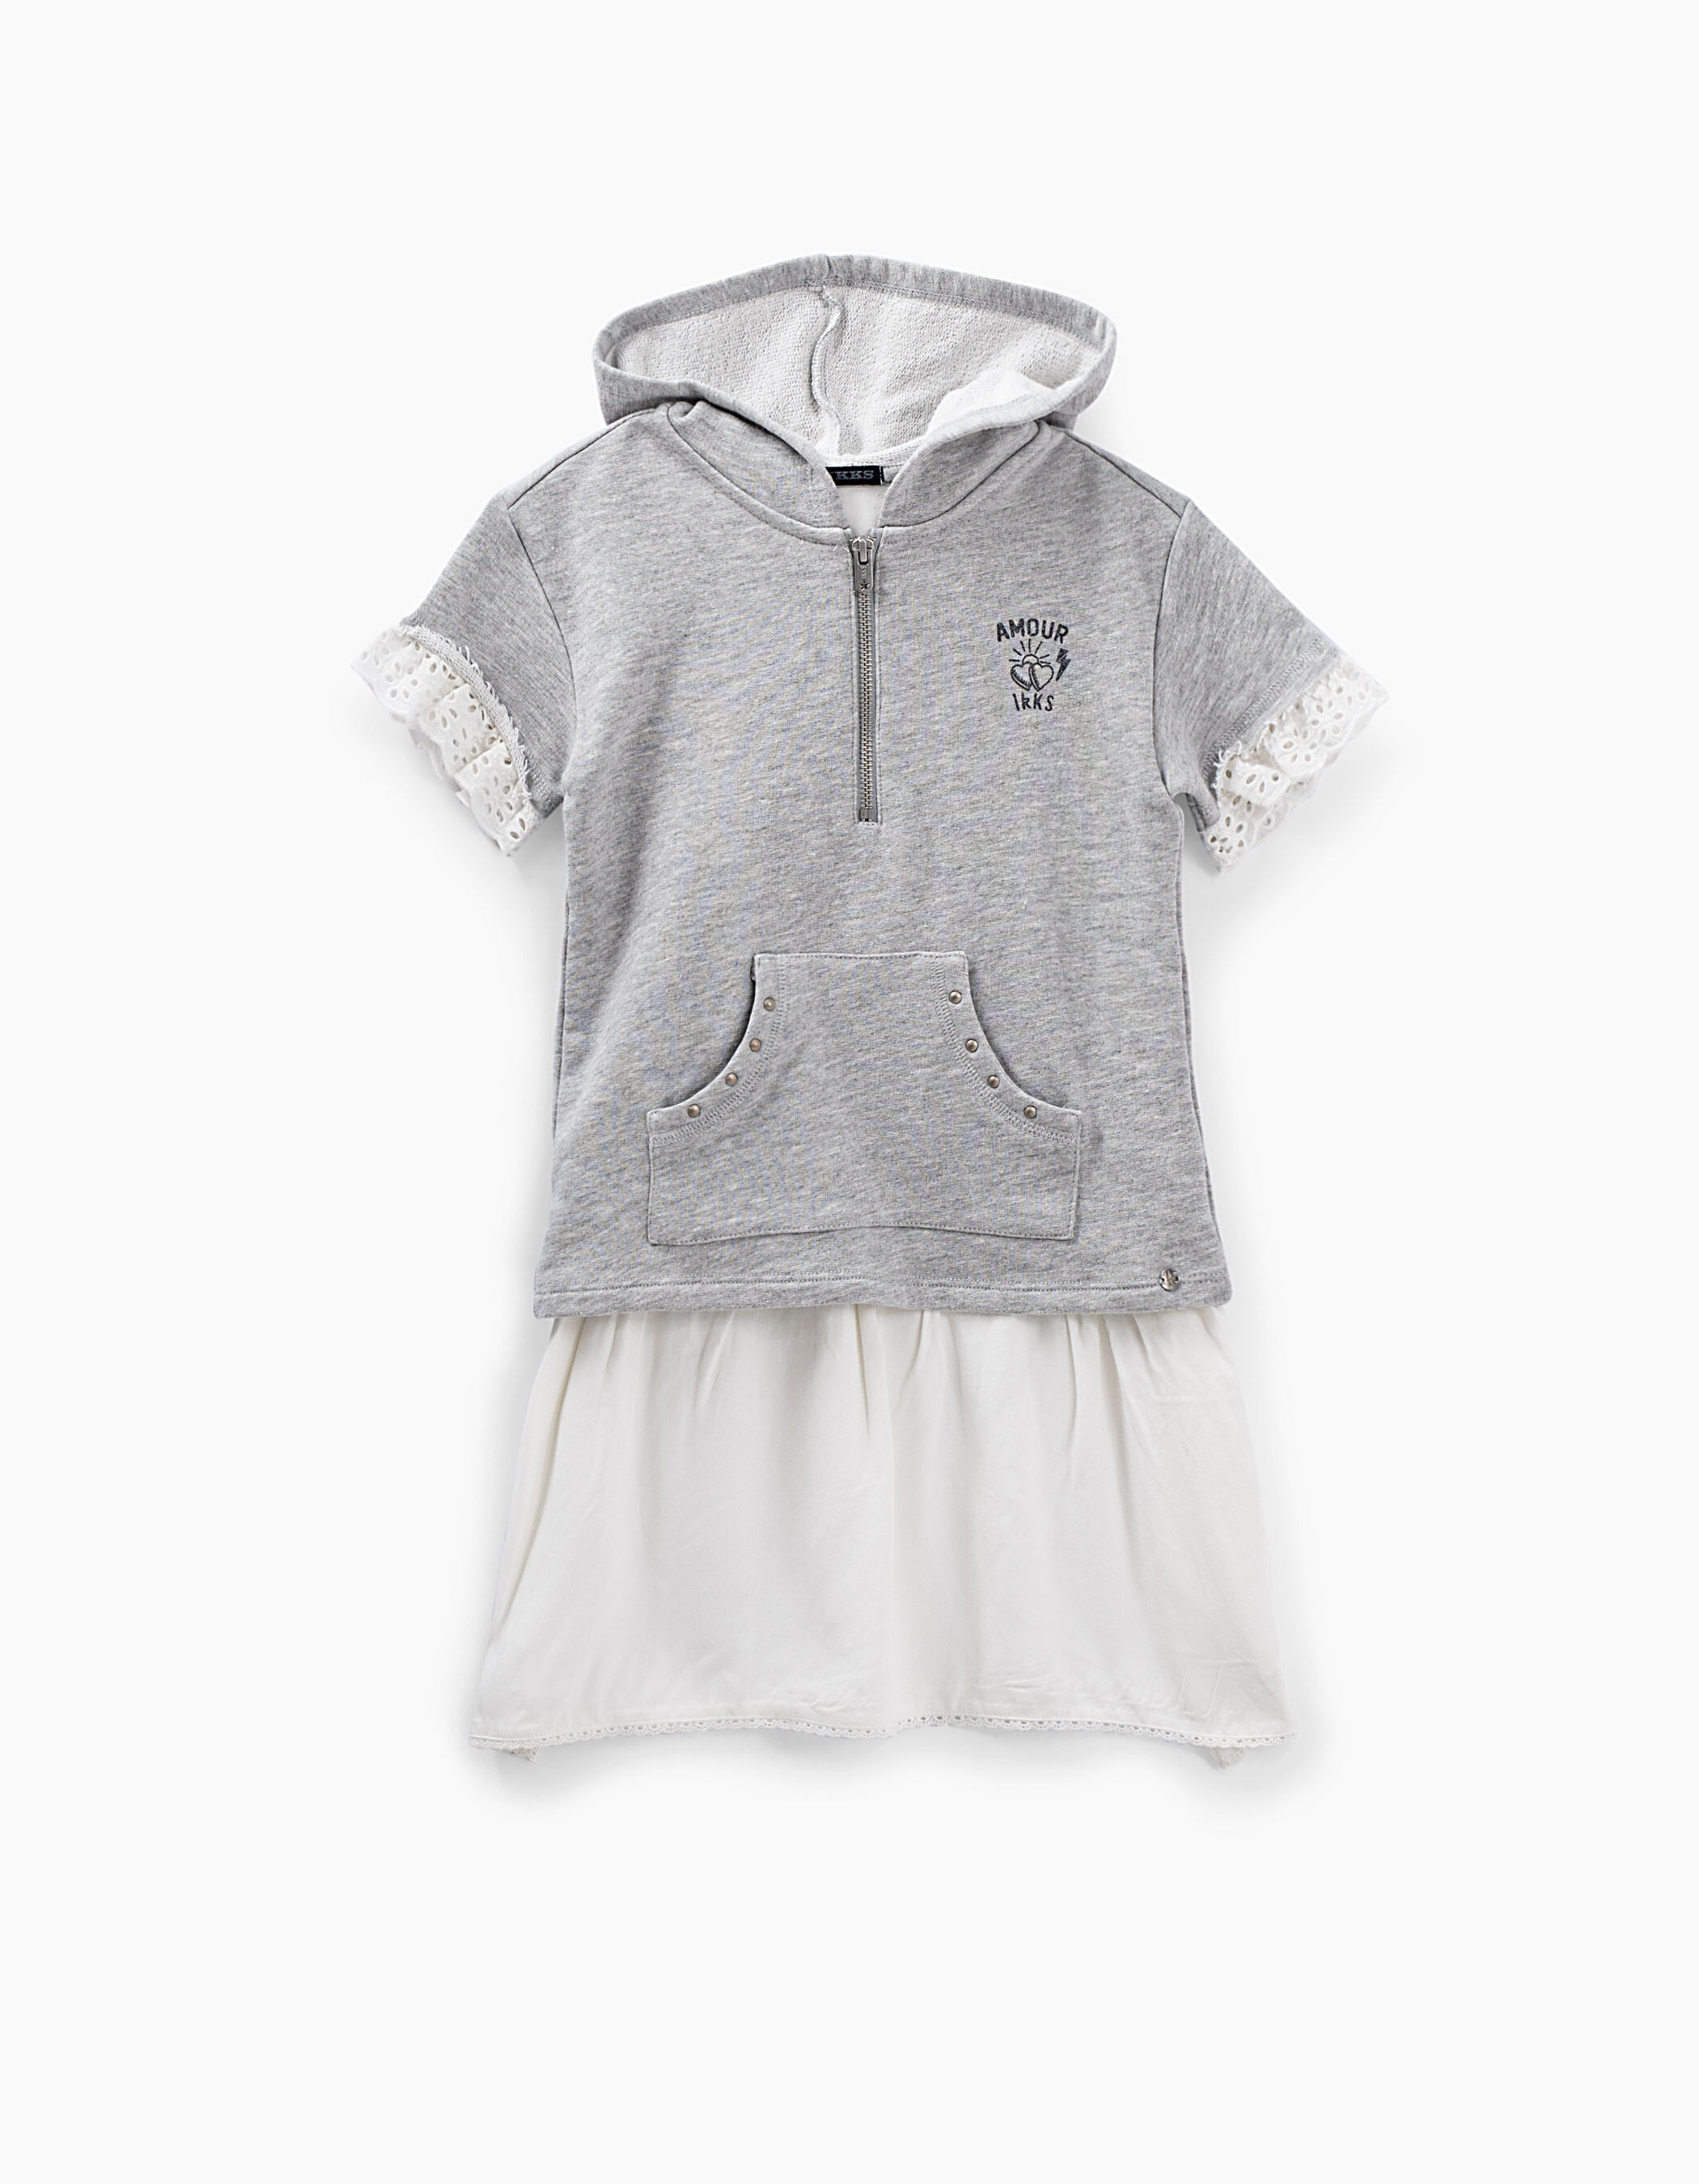 Girls' grey and white trompe-l'œil sweatshirt dress